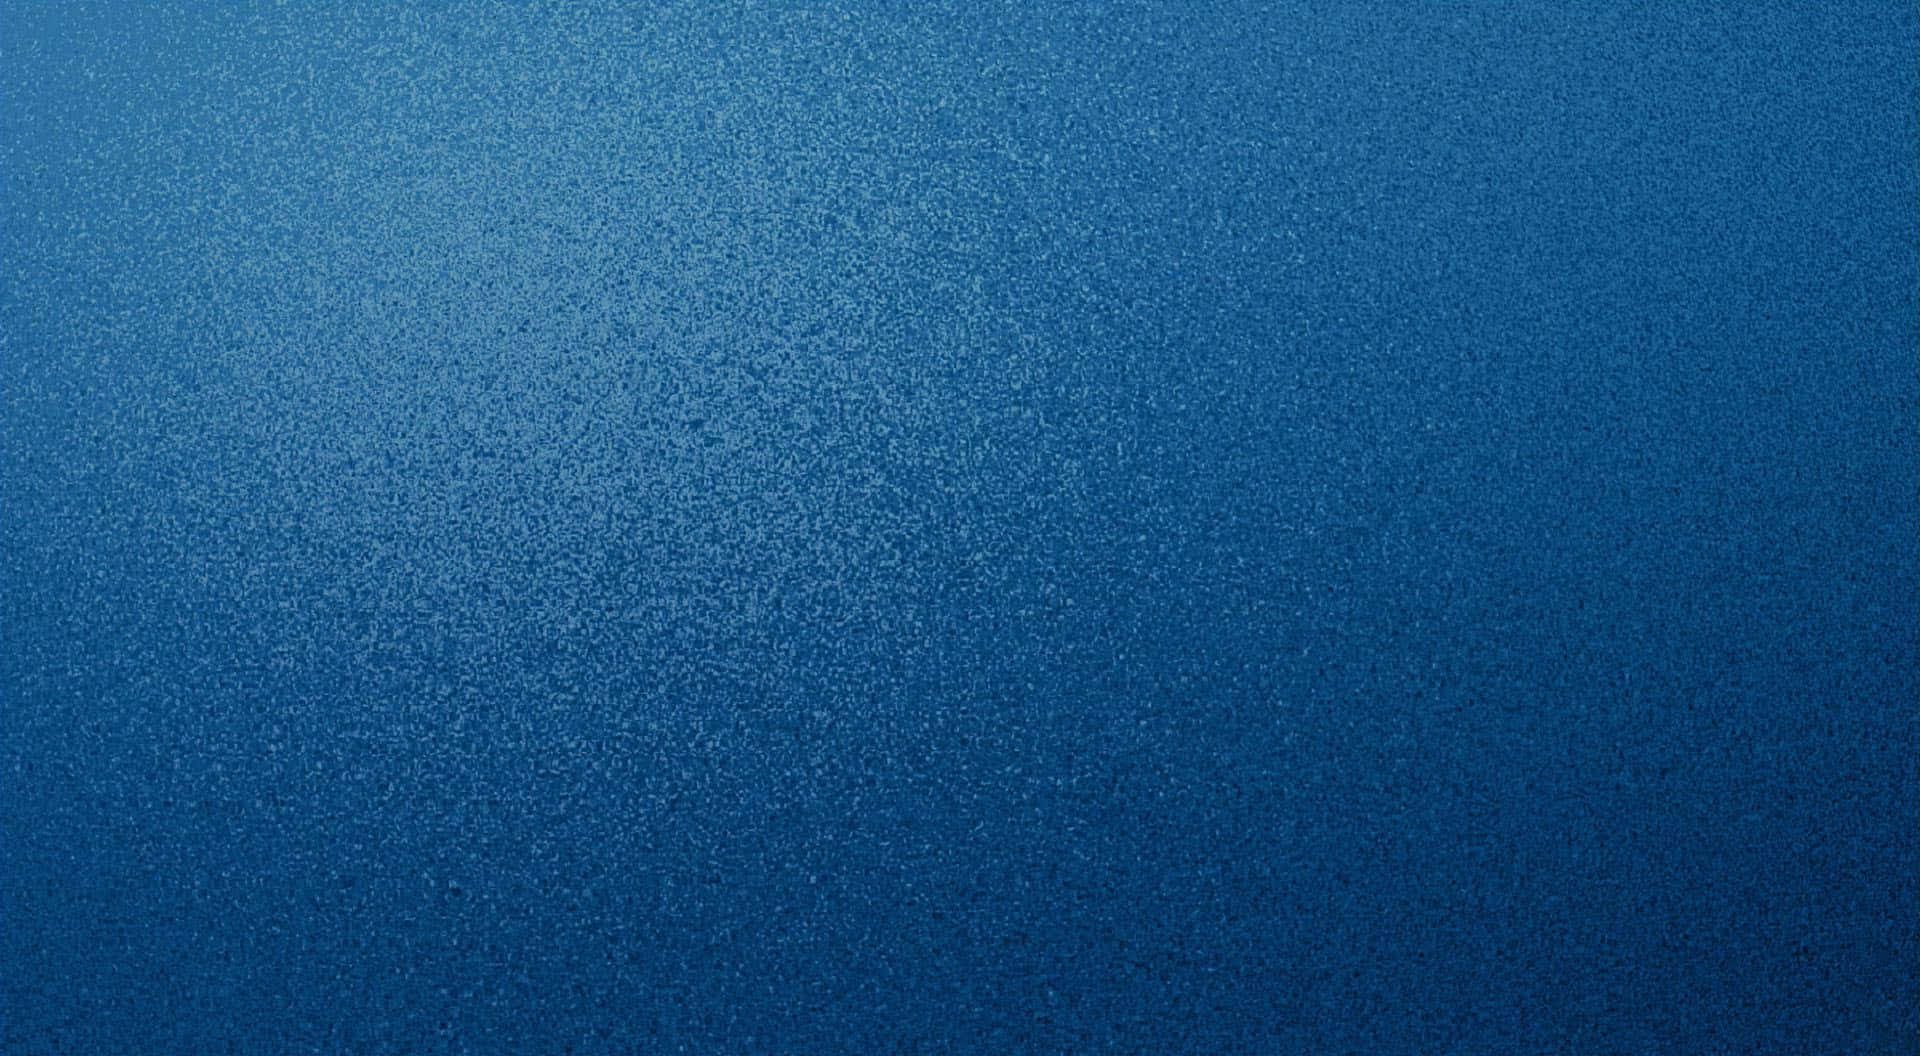 Serene Azure Ripples - A Gorgeous Blue Texture Background